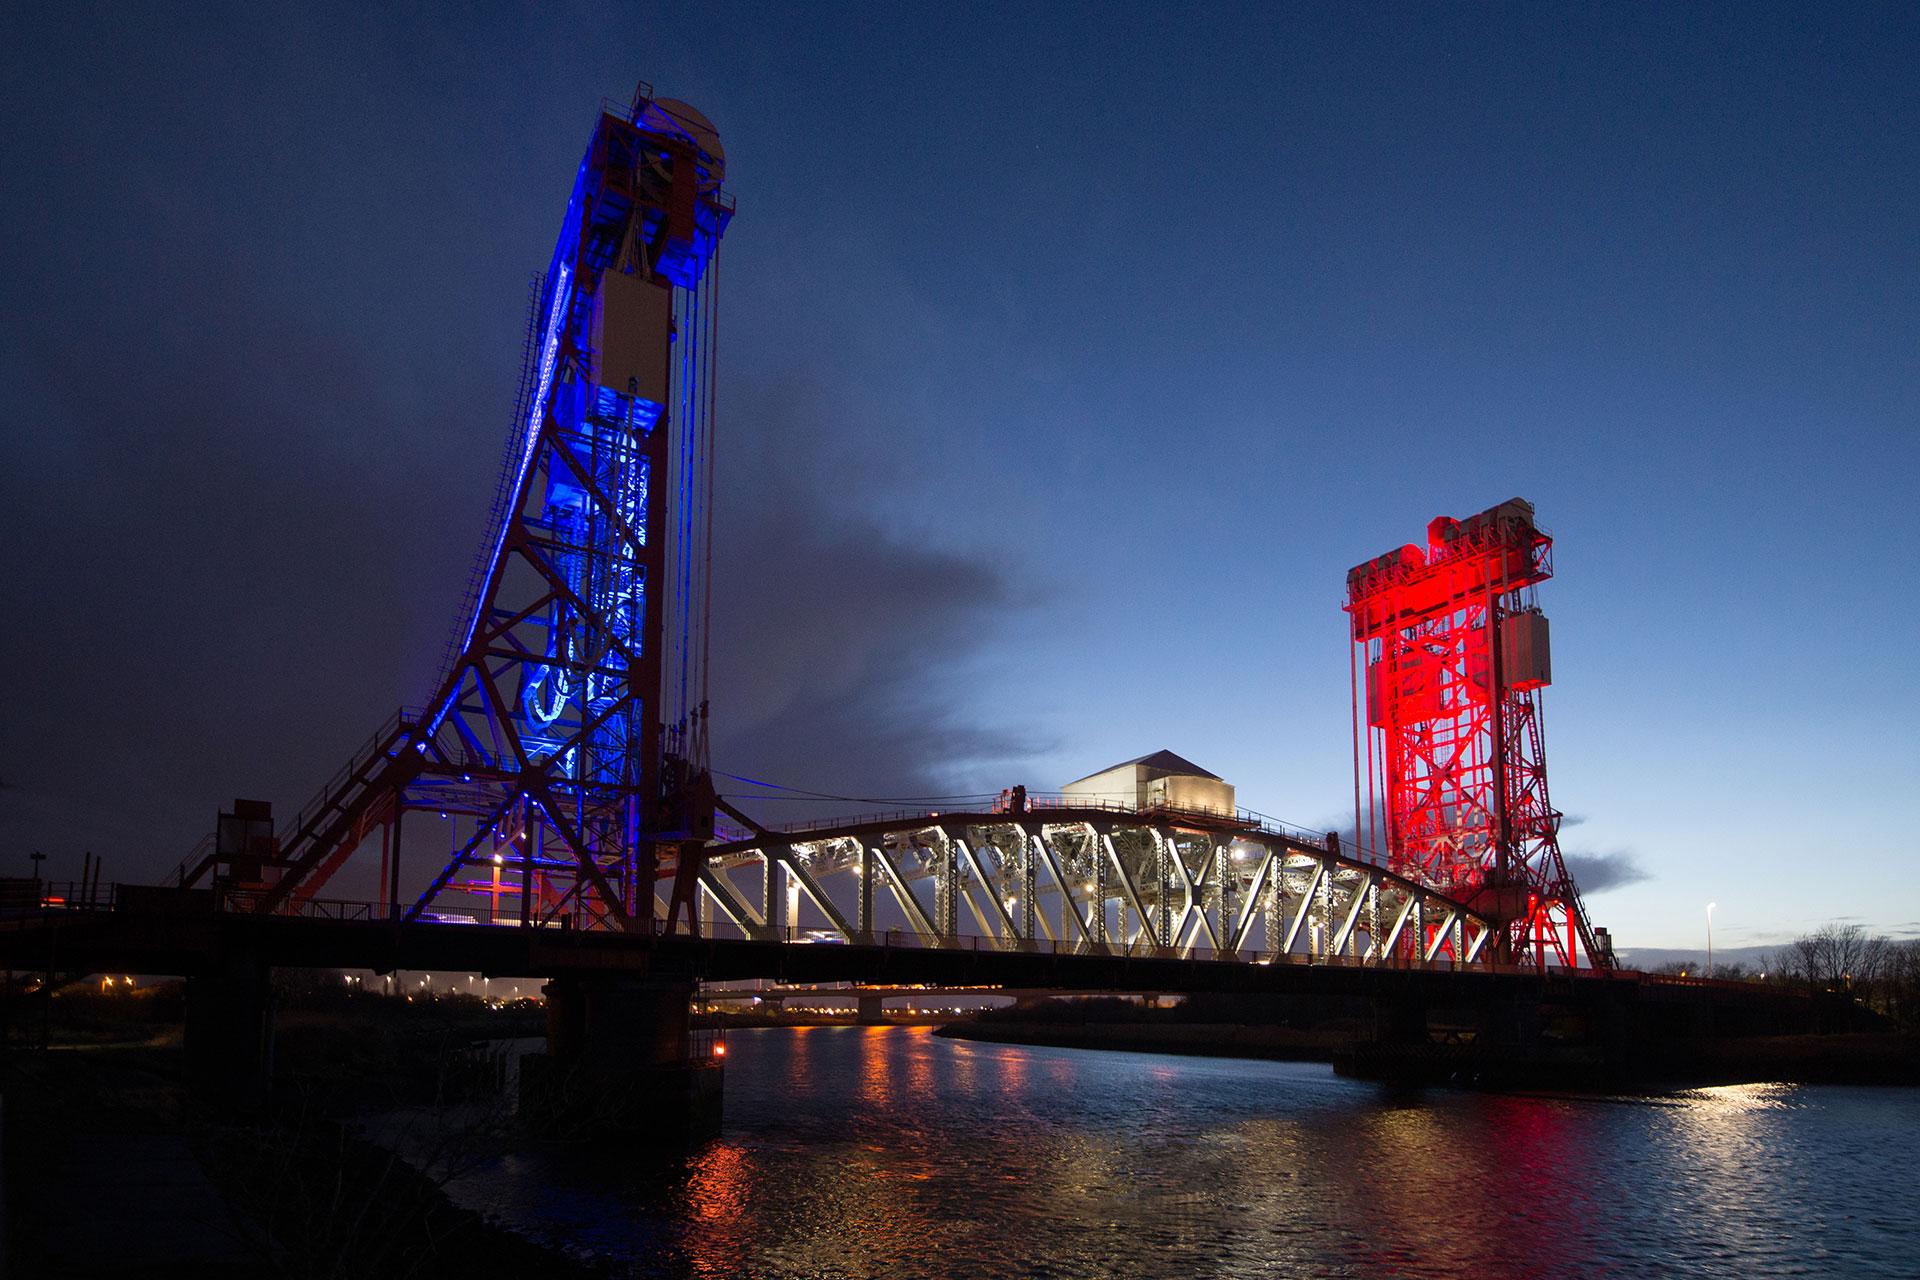 SCULP floodlights illuminate Tees Newport Bridge to create an iconic nocturnal landmark